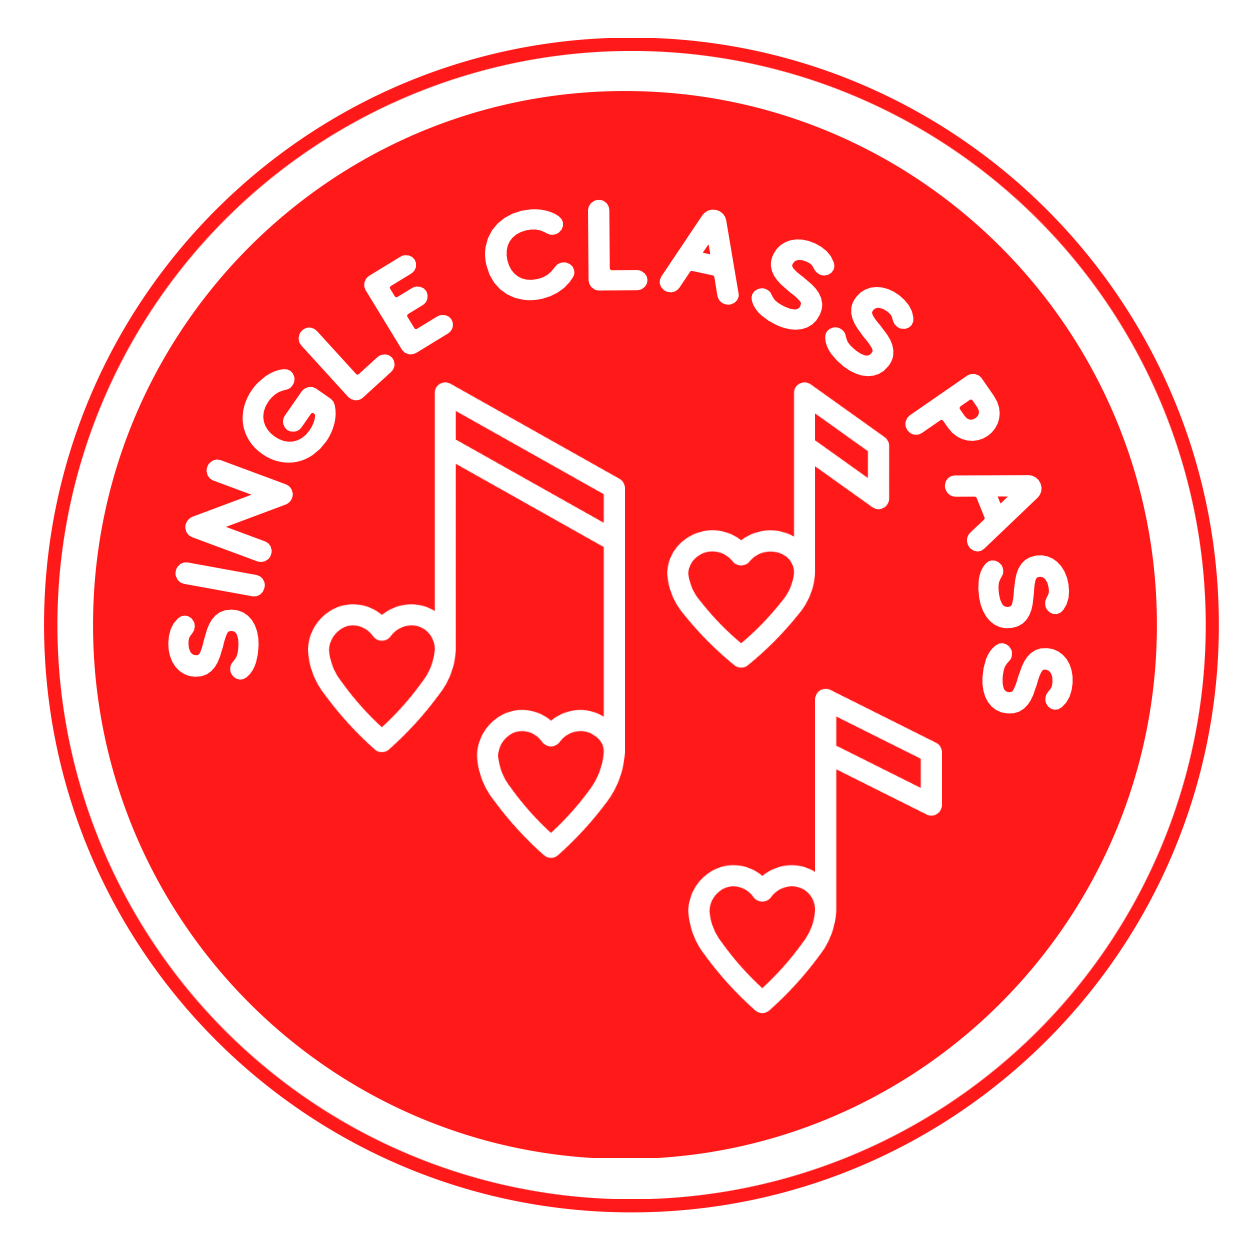 Single Class Pass